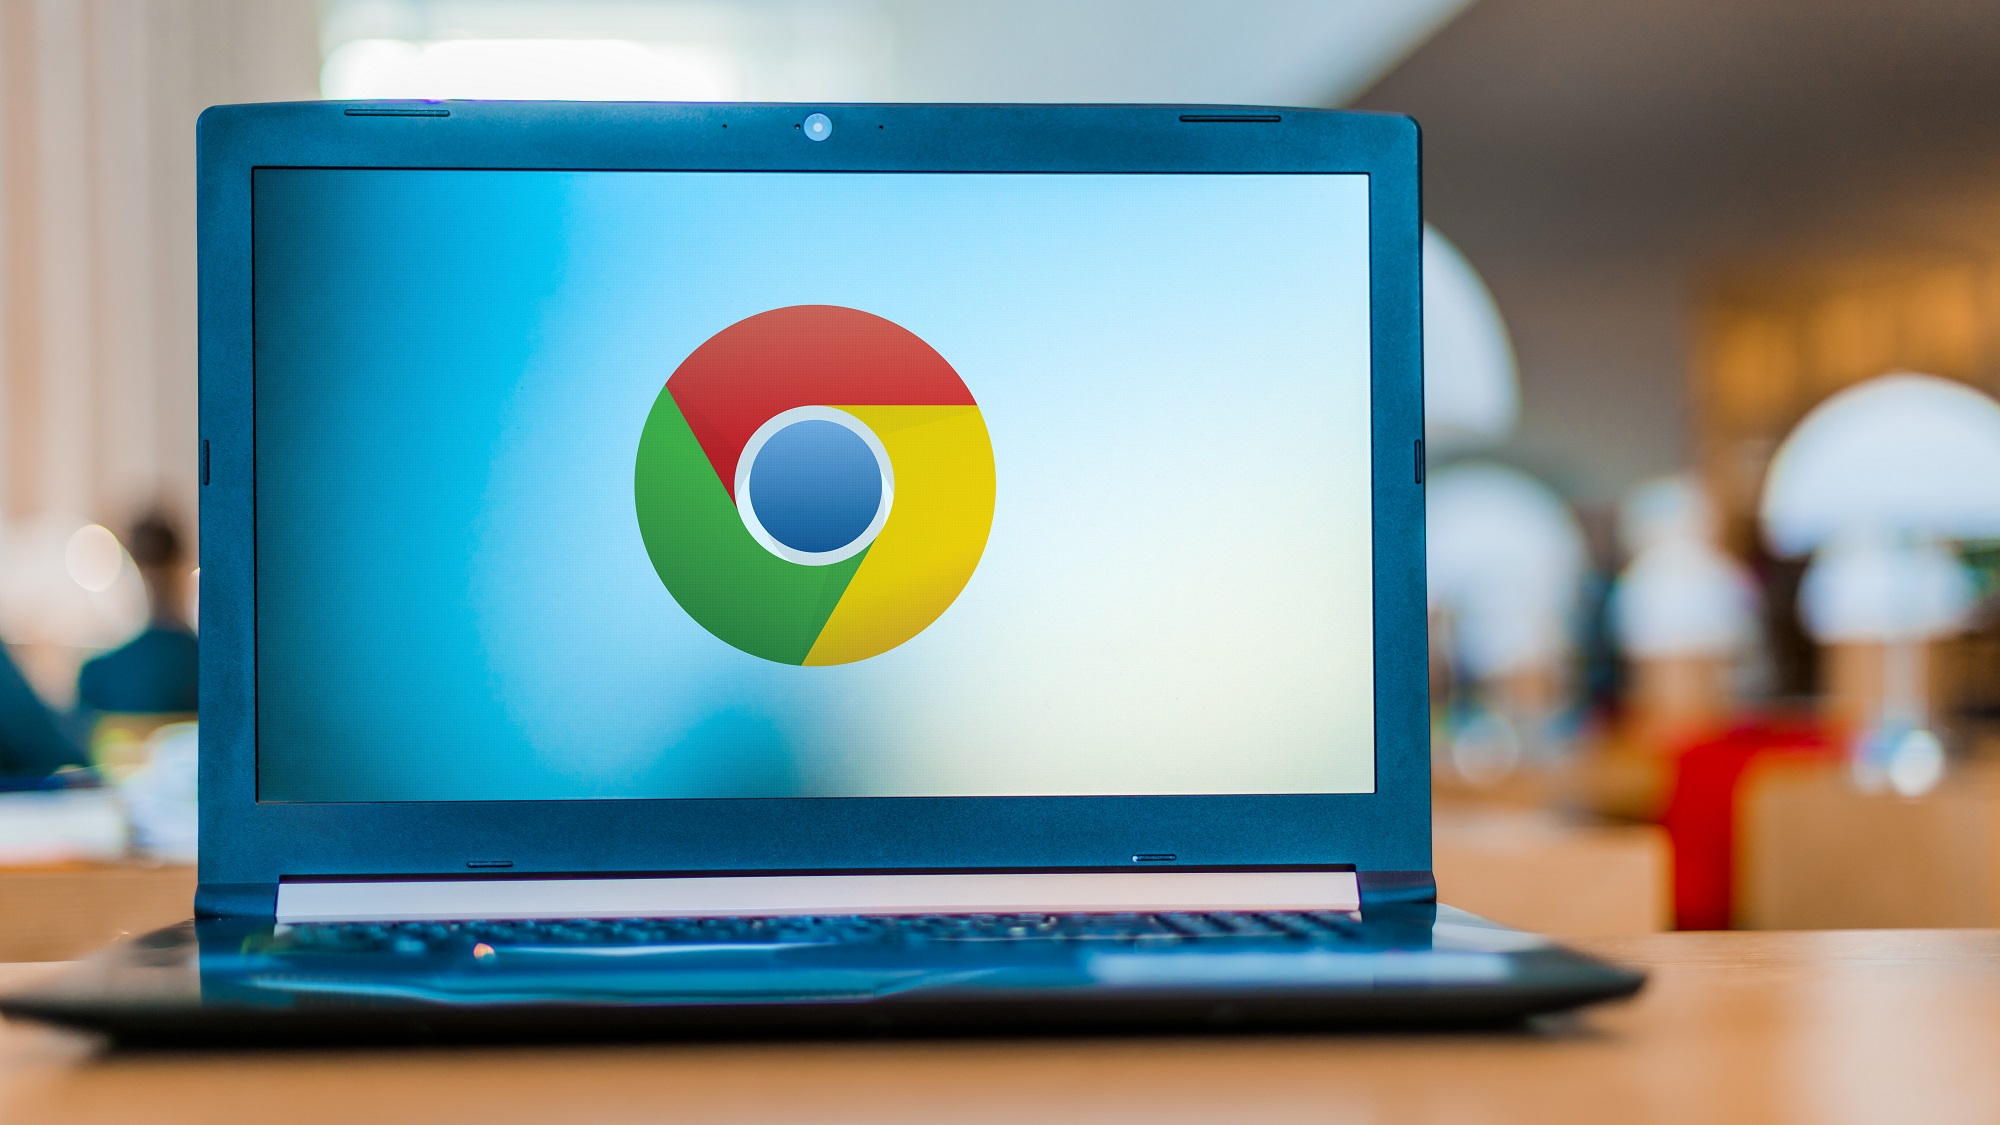 Laptop computer displaying logo of Google Chrome, a cross-platform web browser developed by Google.